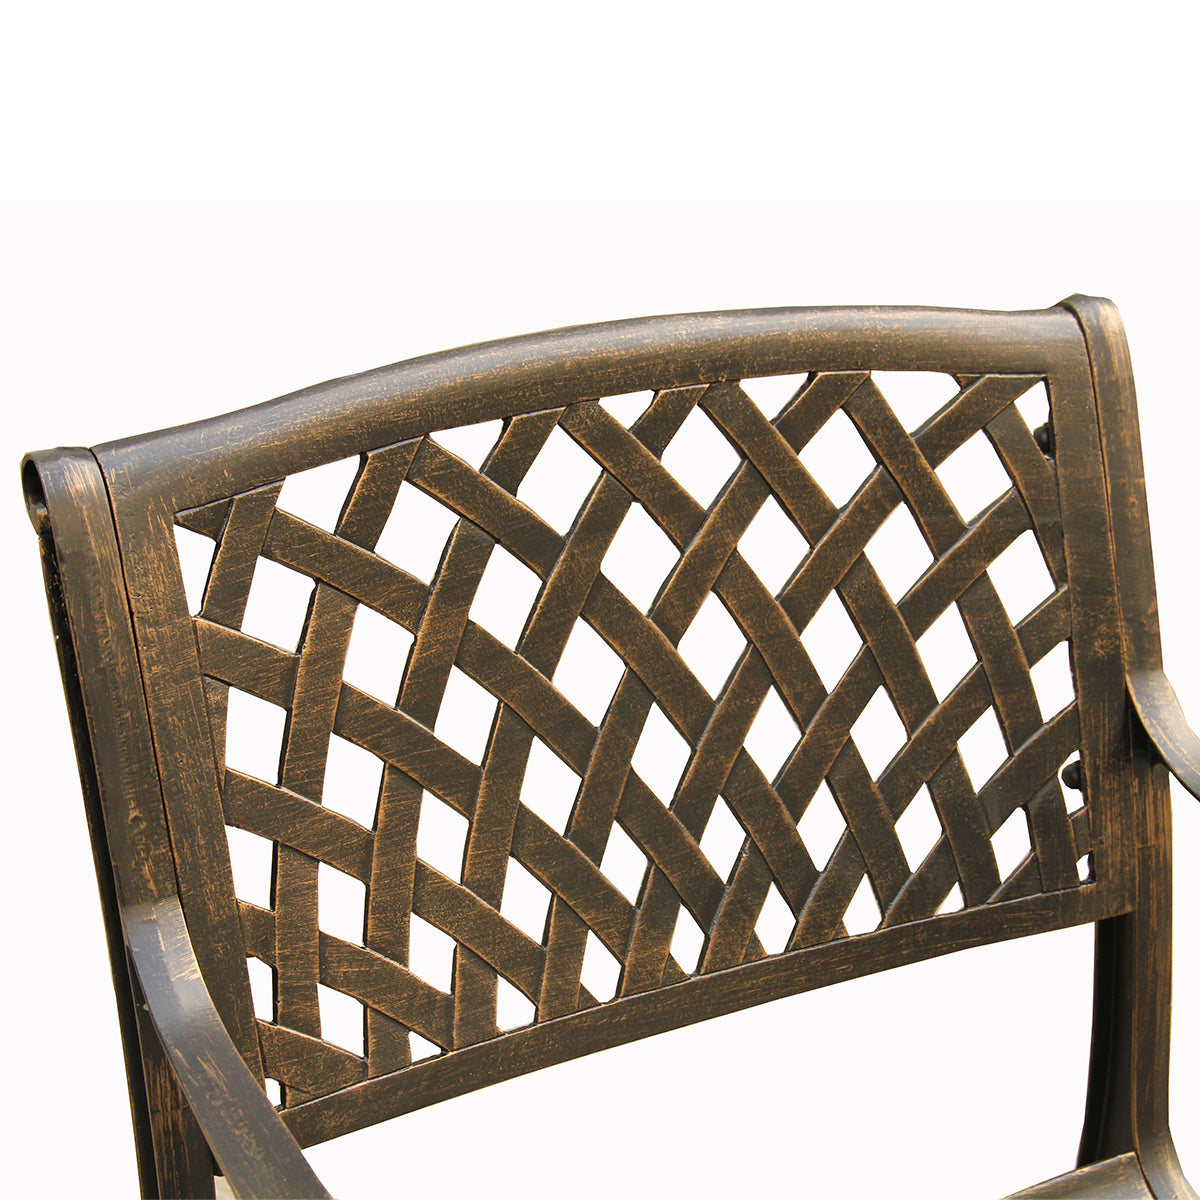 Contemporary Modern Outdoor Mesh Lattice Aluminum Patio Dining Chair